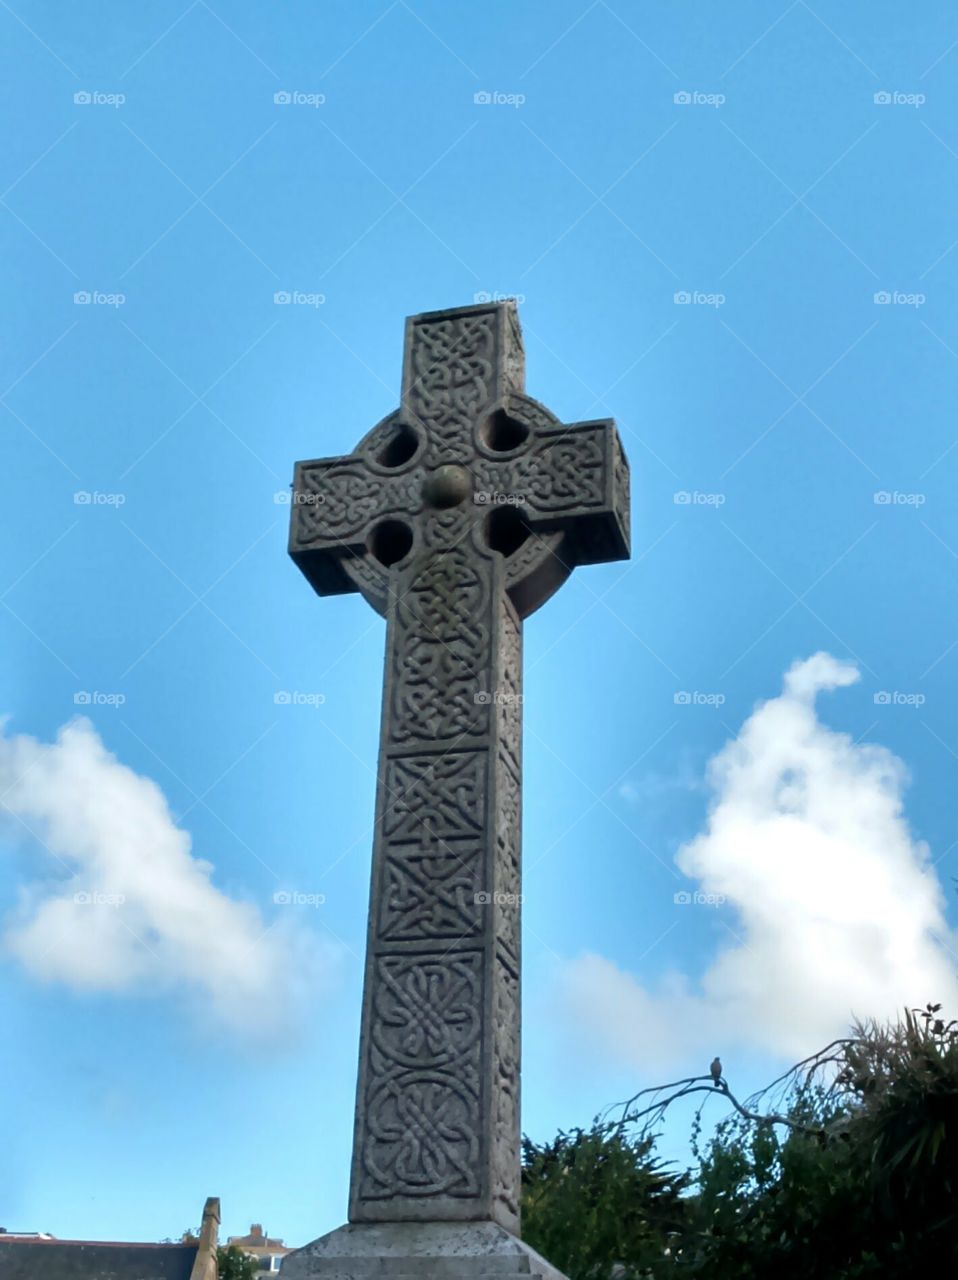 Celtic cross in St Ives Cornwall UK. it's a war memorial.